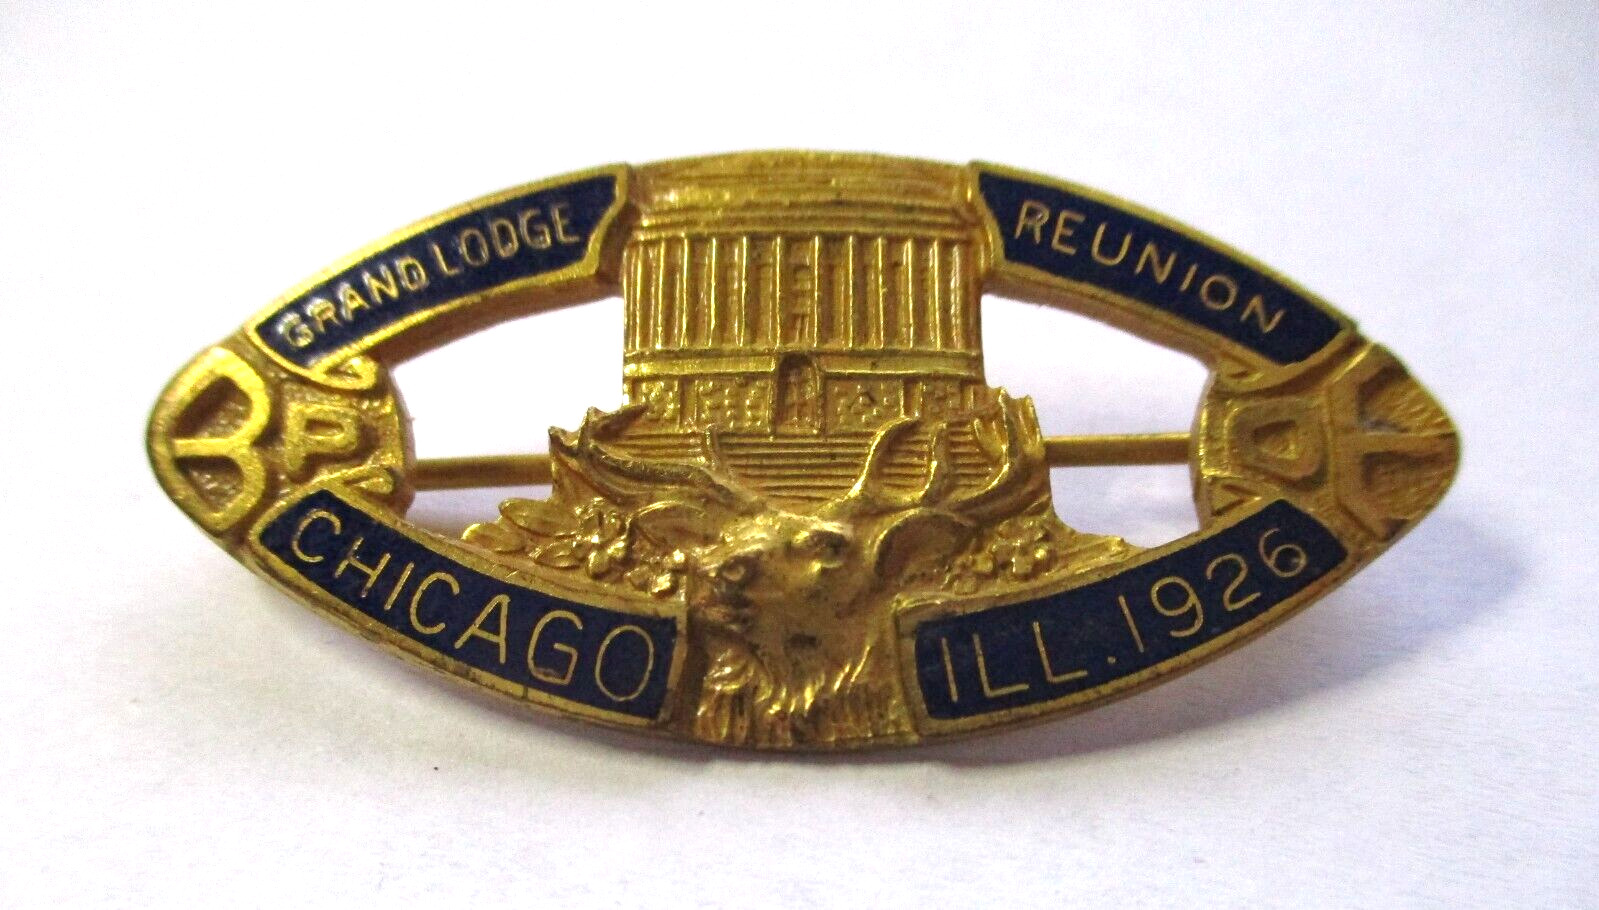 RARE ANTIQUE 1926 CHICAGO ILL. GRAND LODGE REUNION B.P.O. ELKS BADGE MEDAL